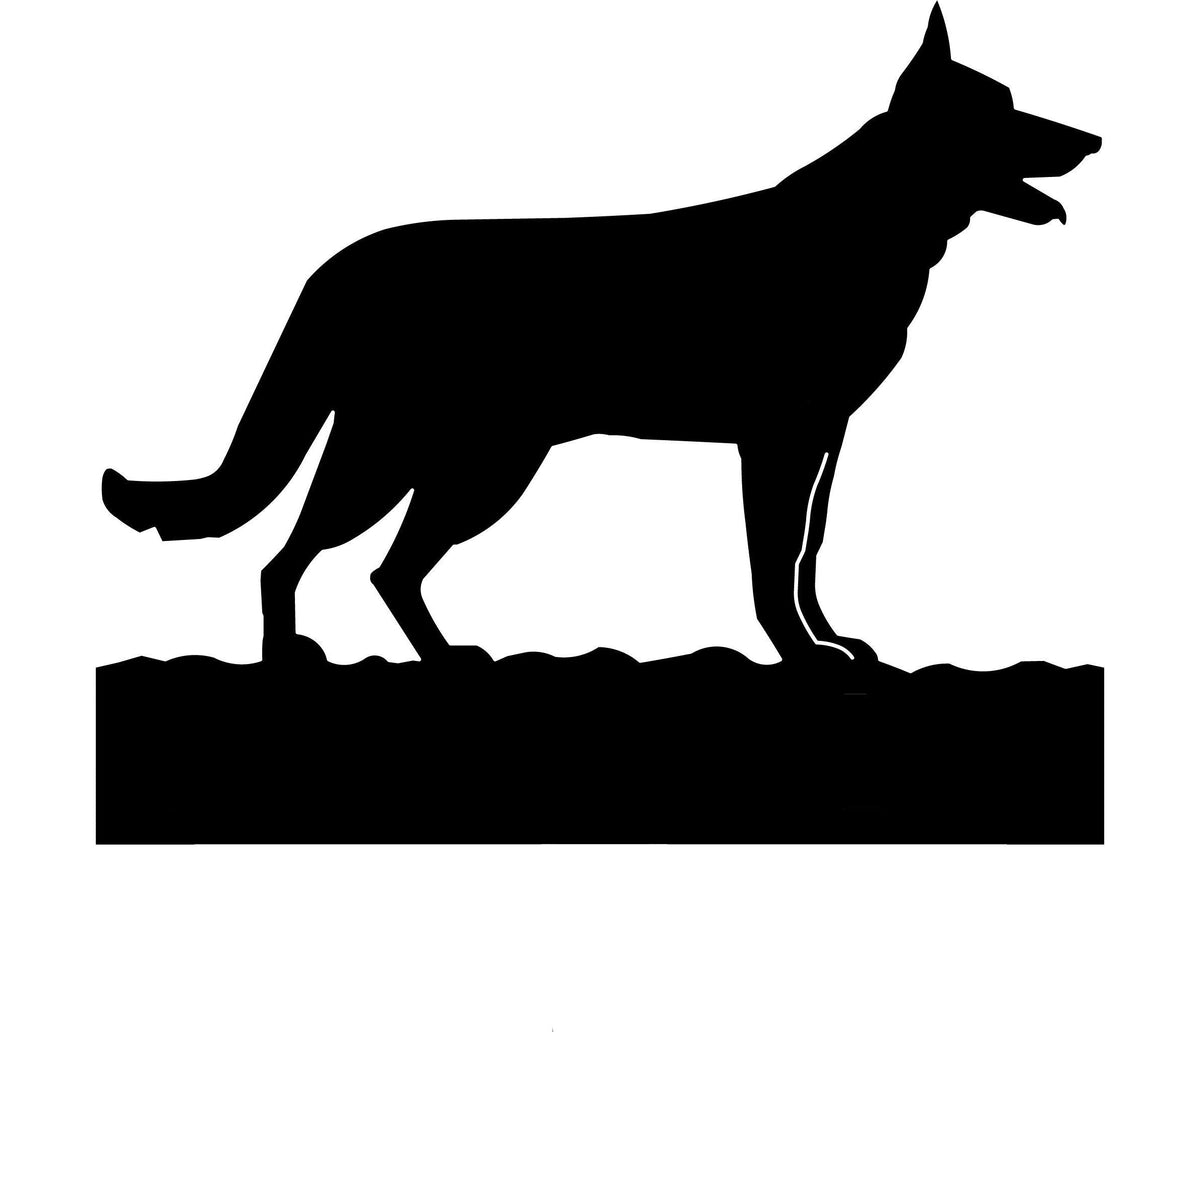 German Shepherd dog address stake